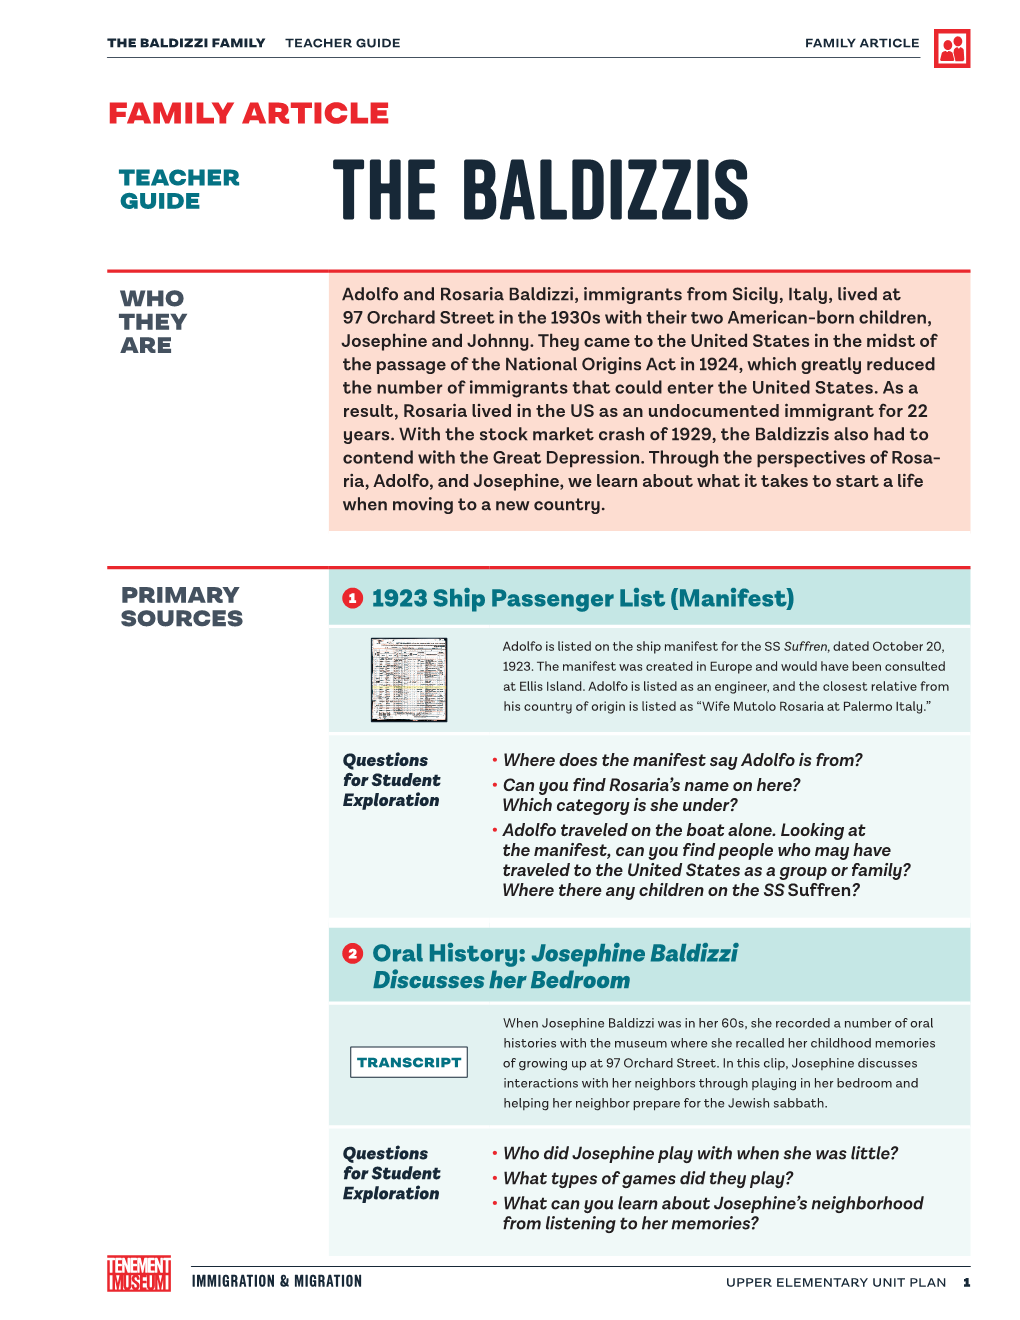 The Baldizzis